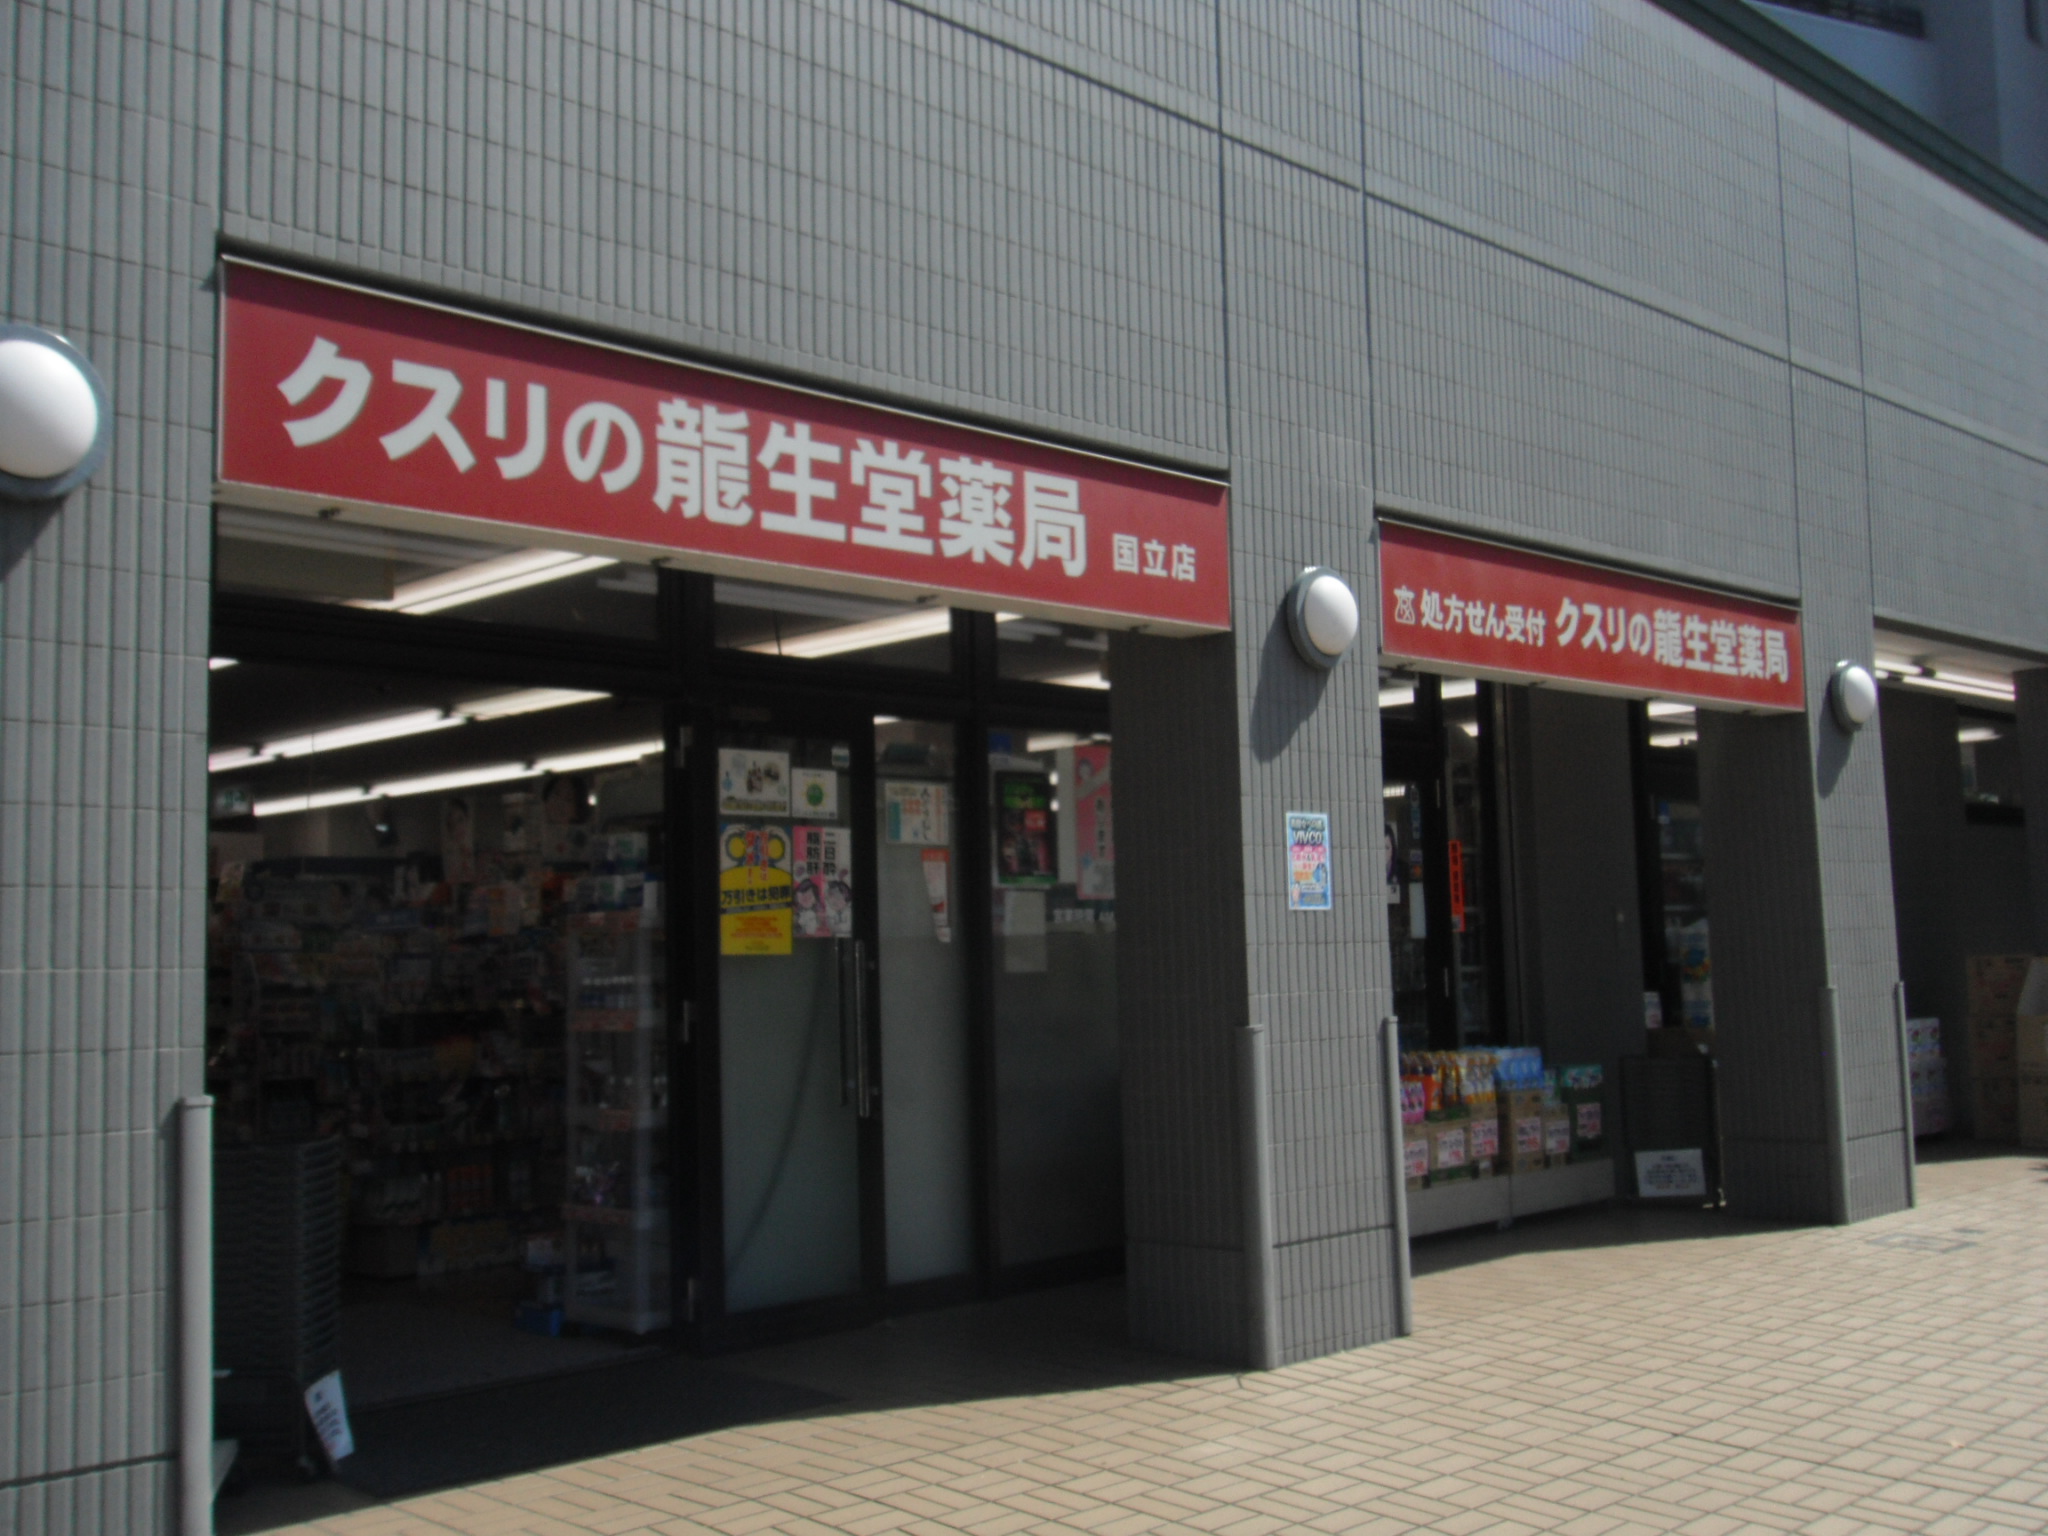 Dorakkusutoa. Tatsuodo pharmacy National shop 629m until (drugstore)